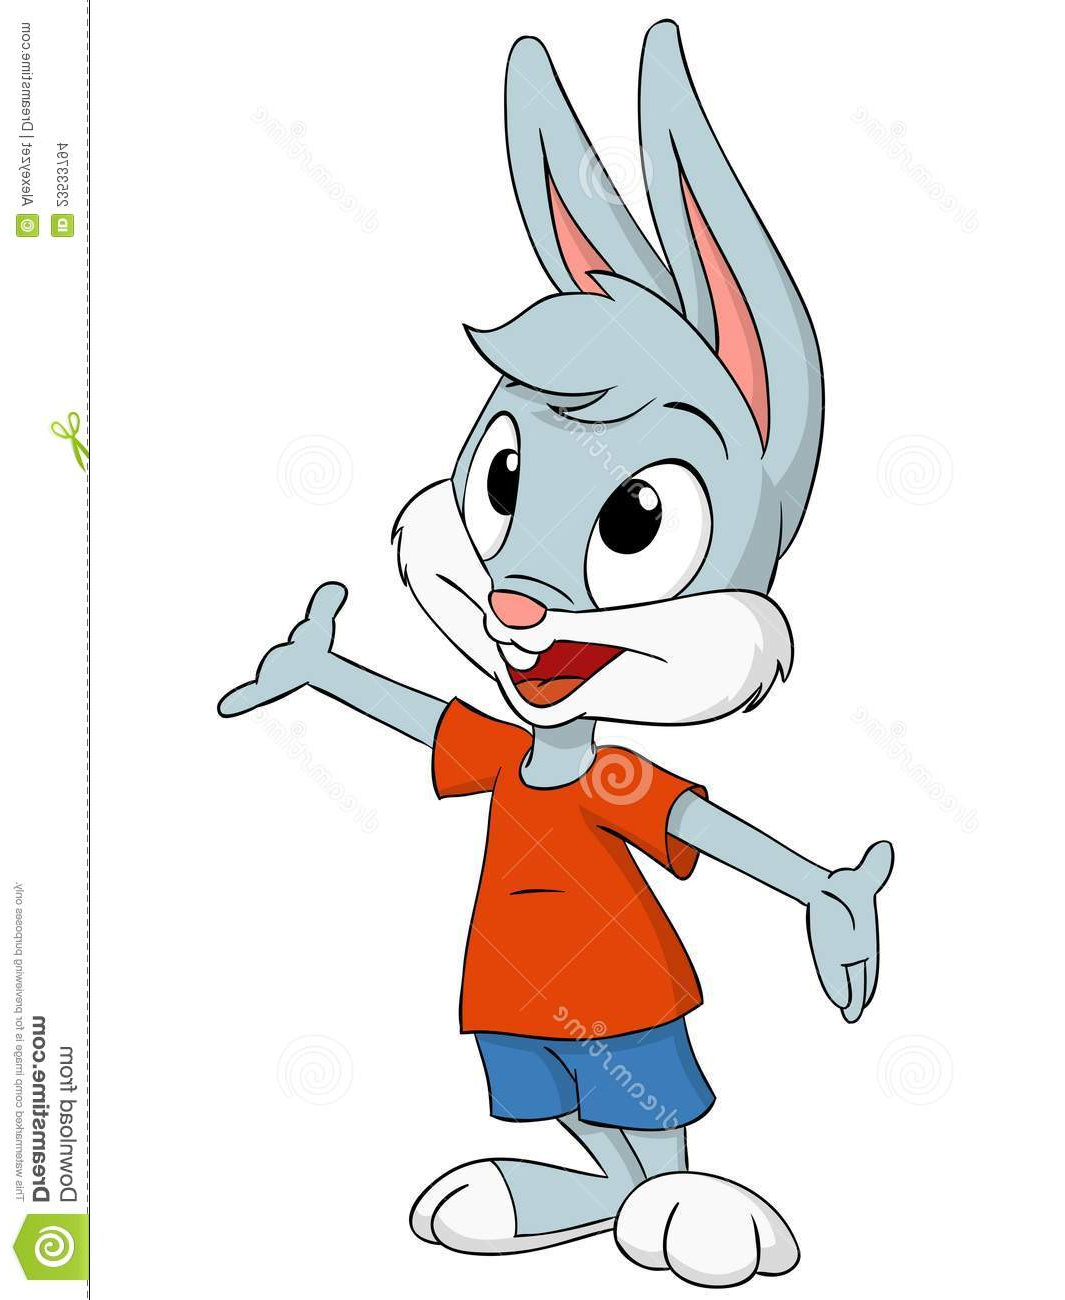 stock images cartoon easter rabbit isolated white image